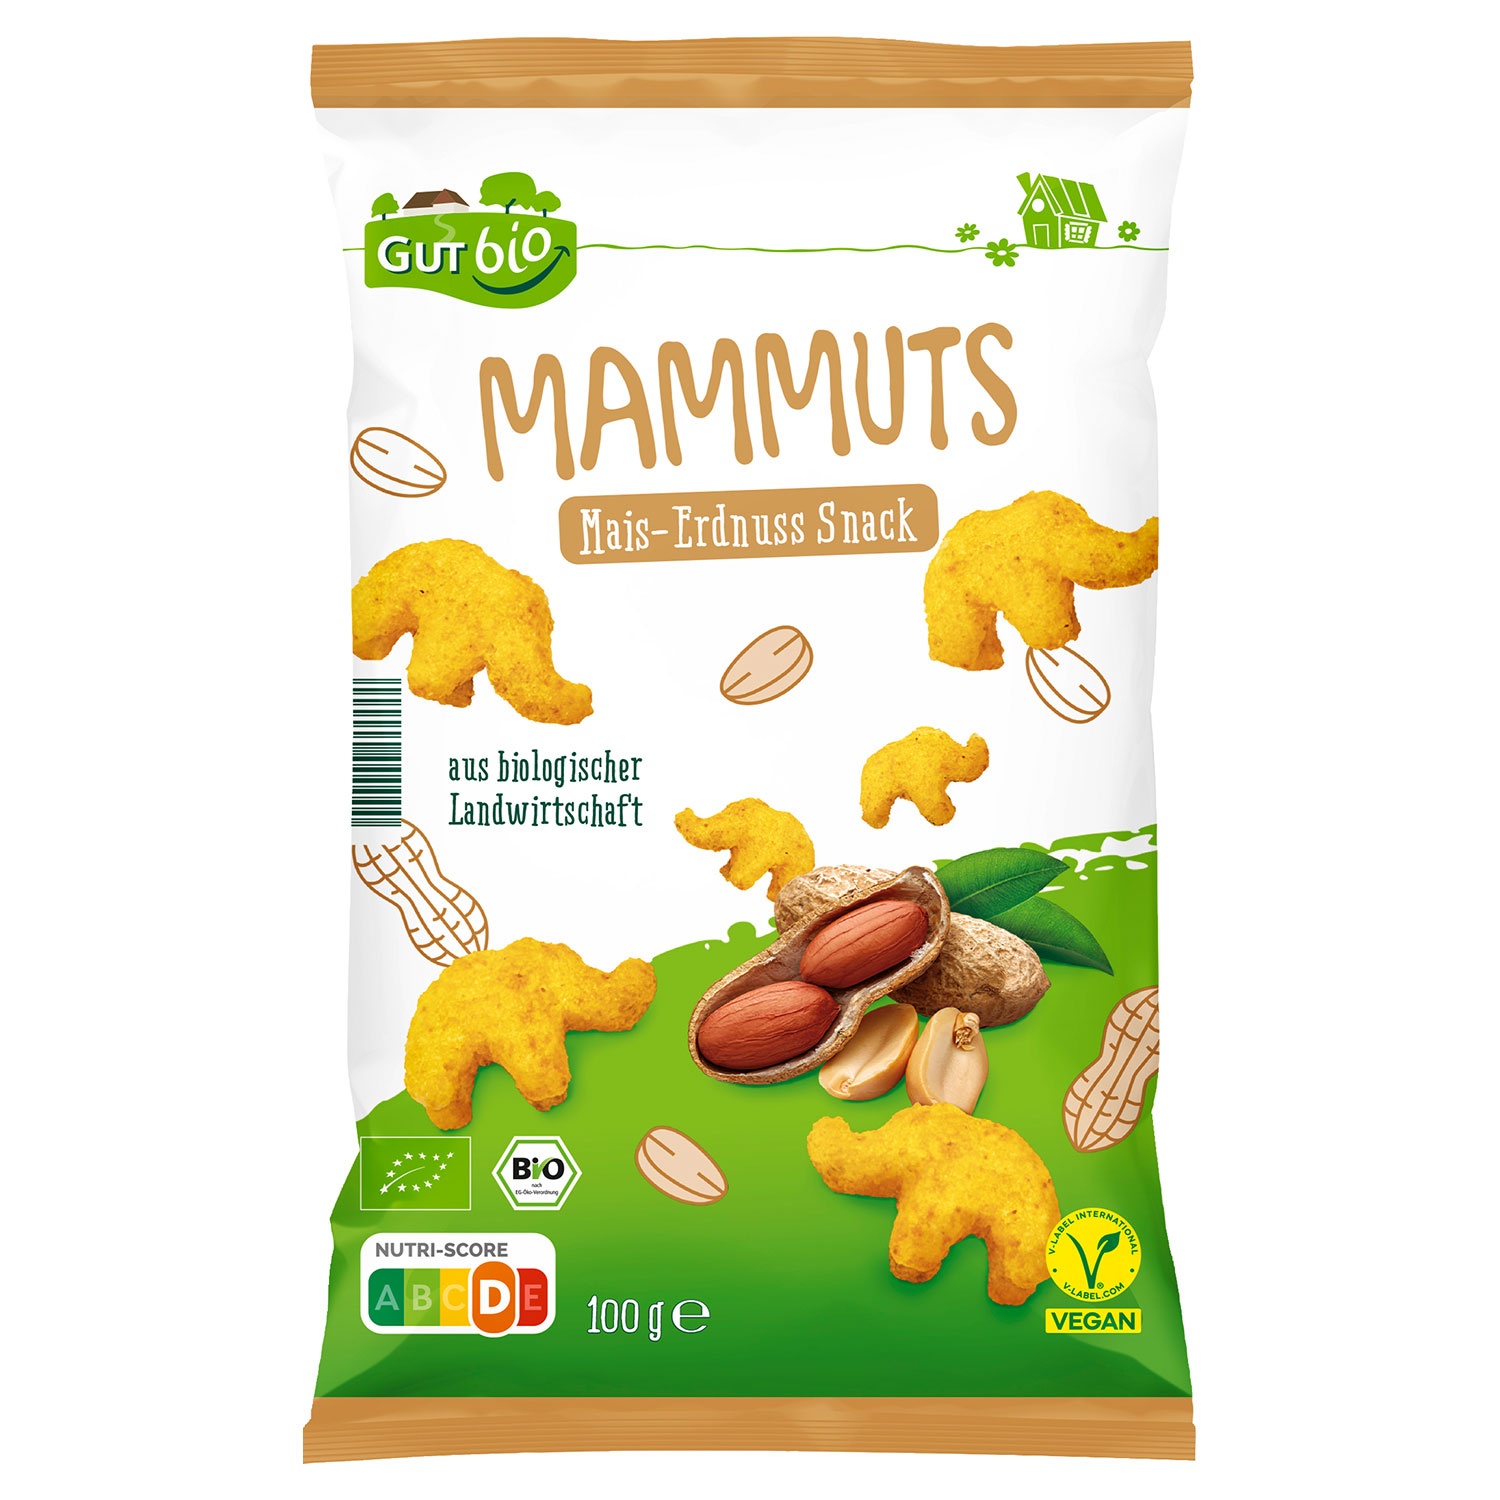 GUT BIO Bio-Mais-Erdnuss-Snack „Mammuts“ 100 g